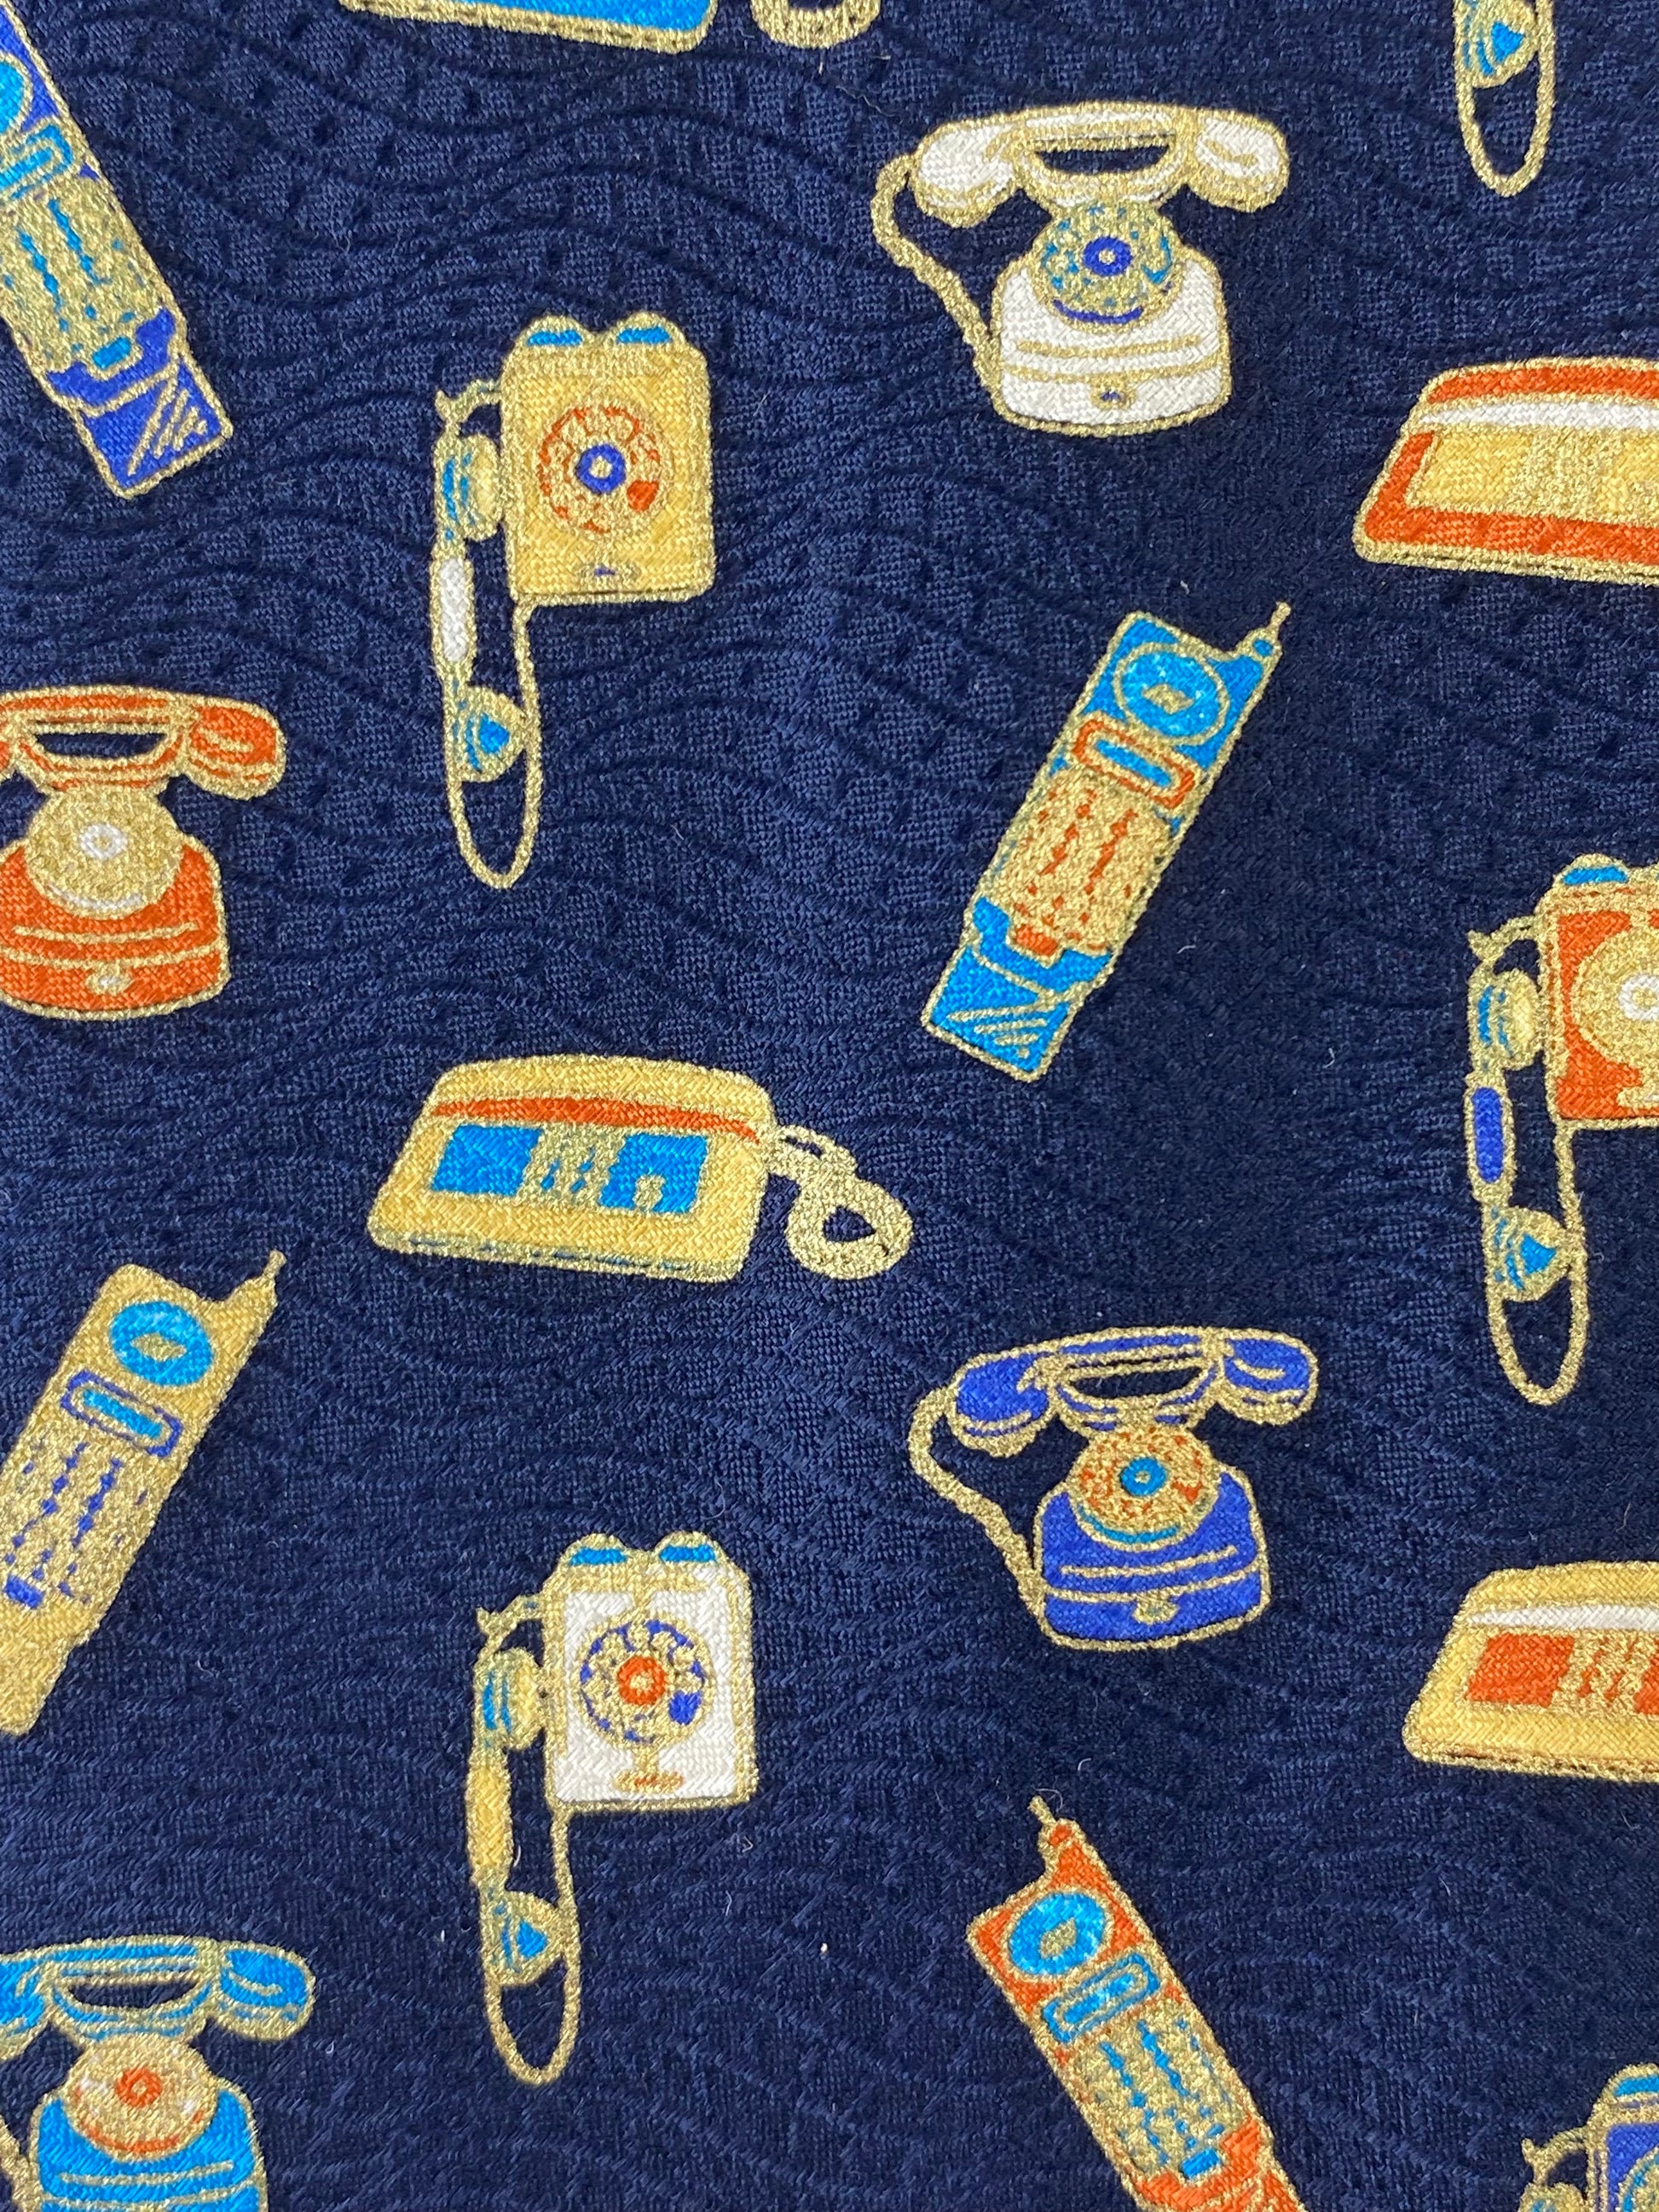 Close-up pattern detail of: 90s Deadstock Silk Necktie, Men's Vintage Navy Metallic Novelty Telephone Print Tie, NOS